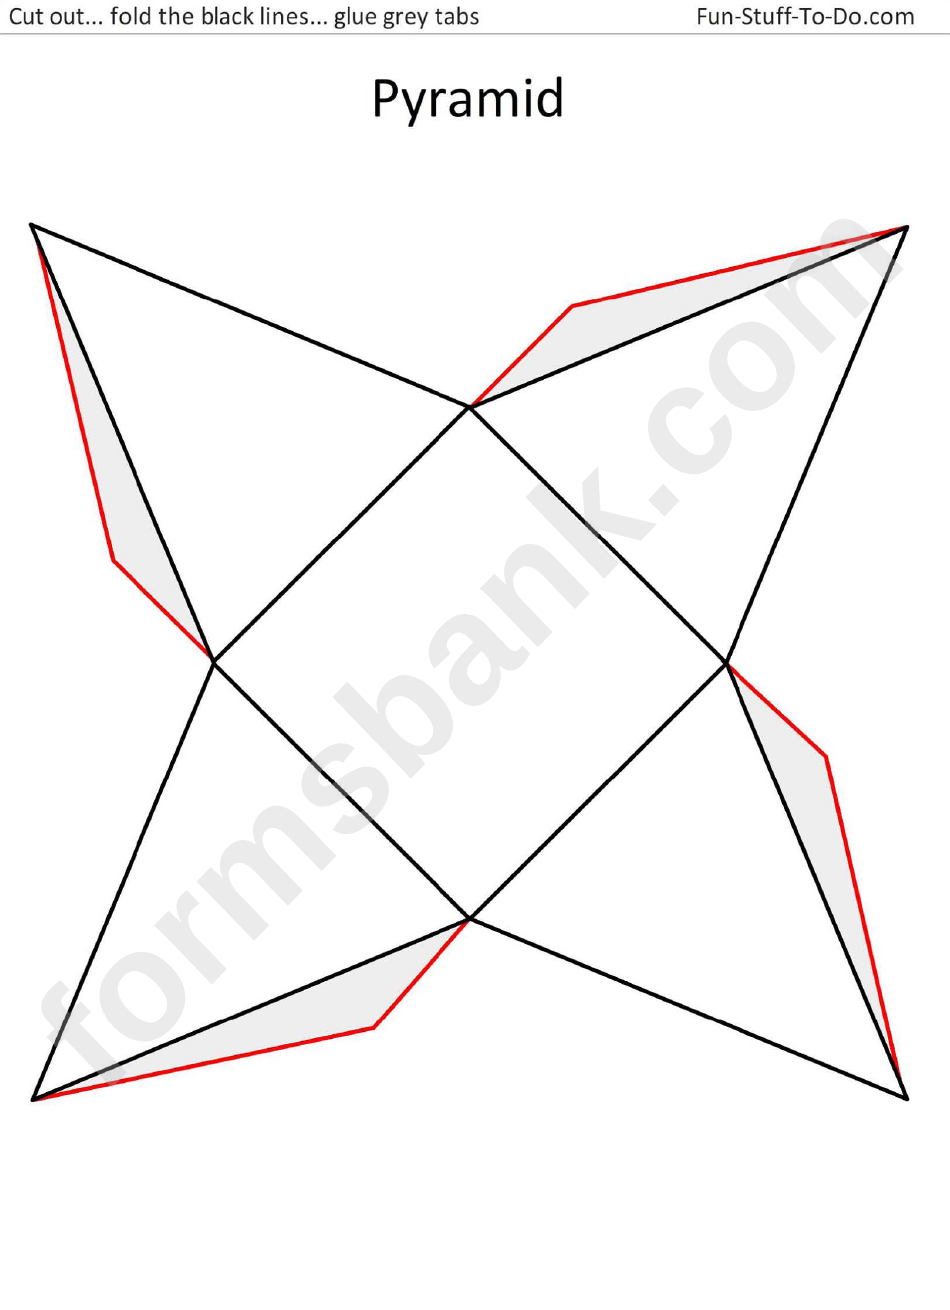 Square Based Pyramid Templates printable pdf download